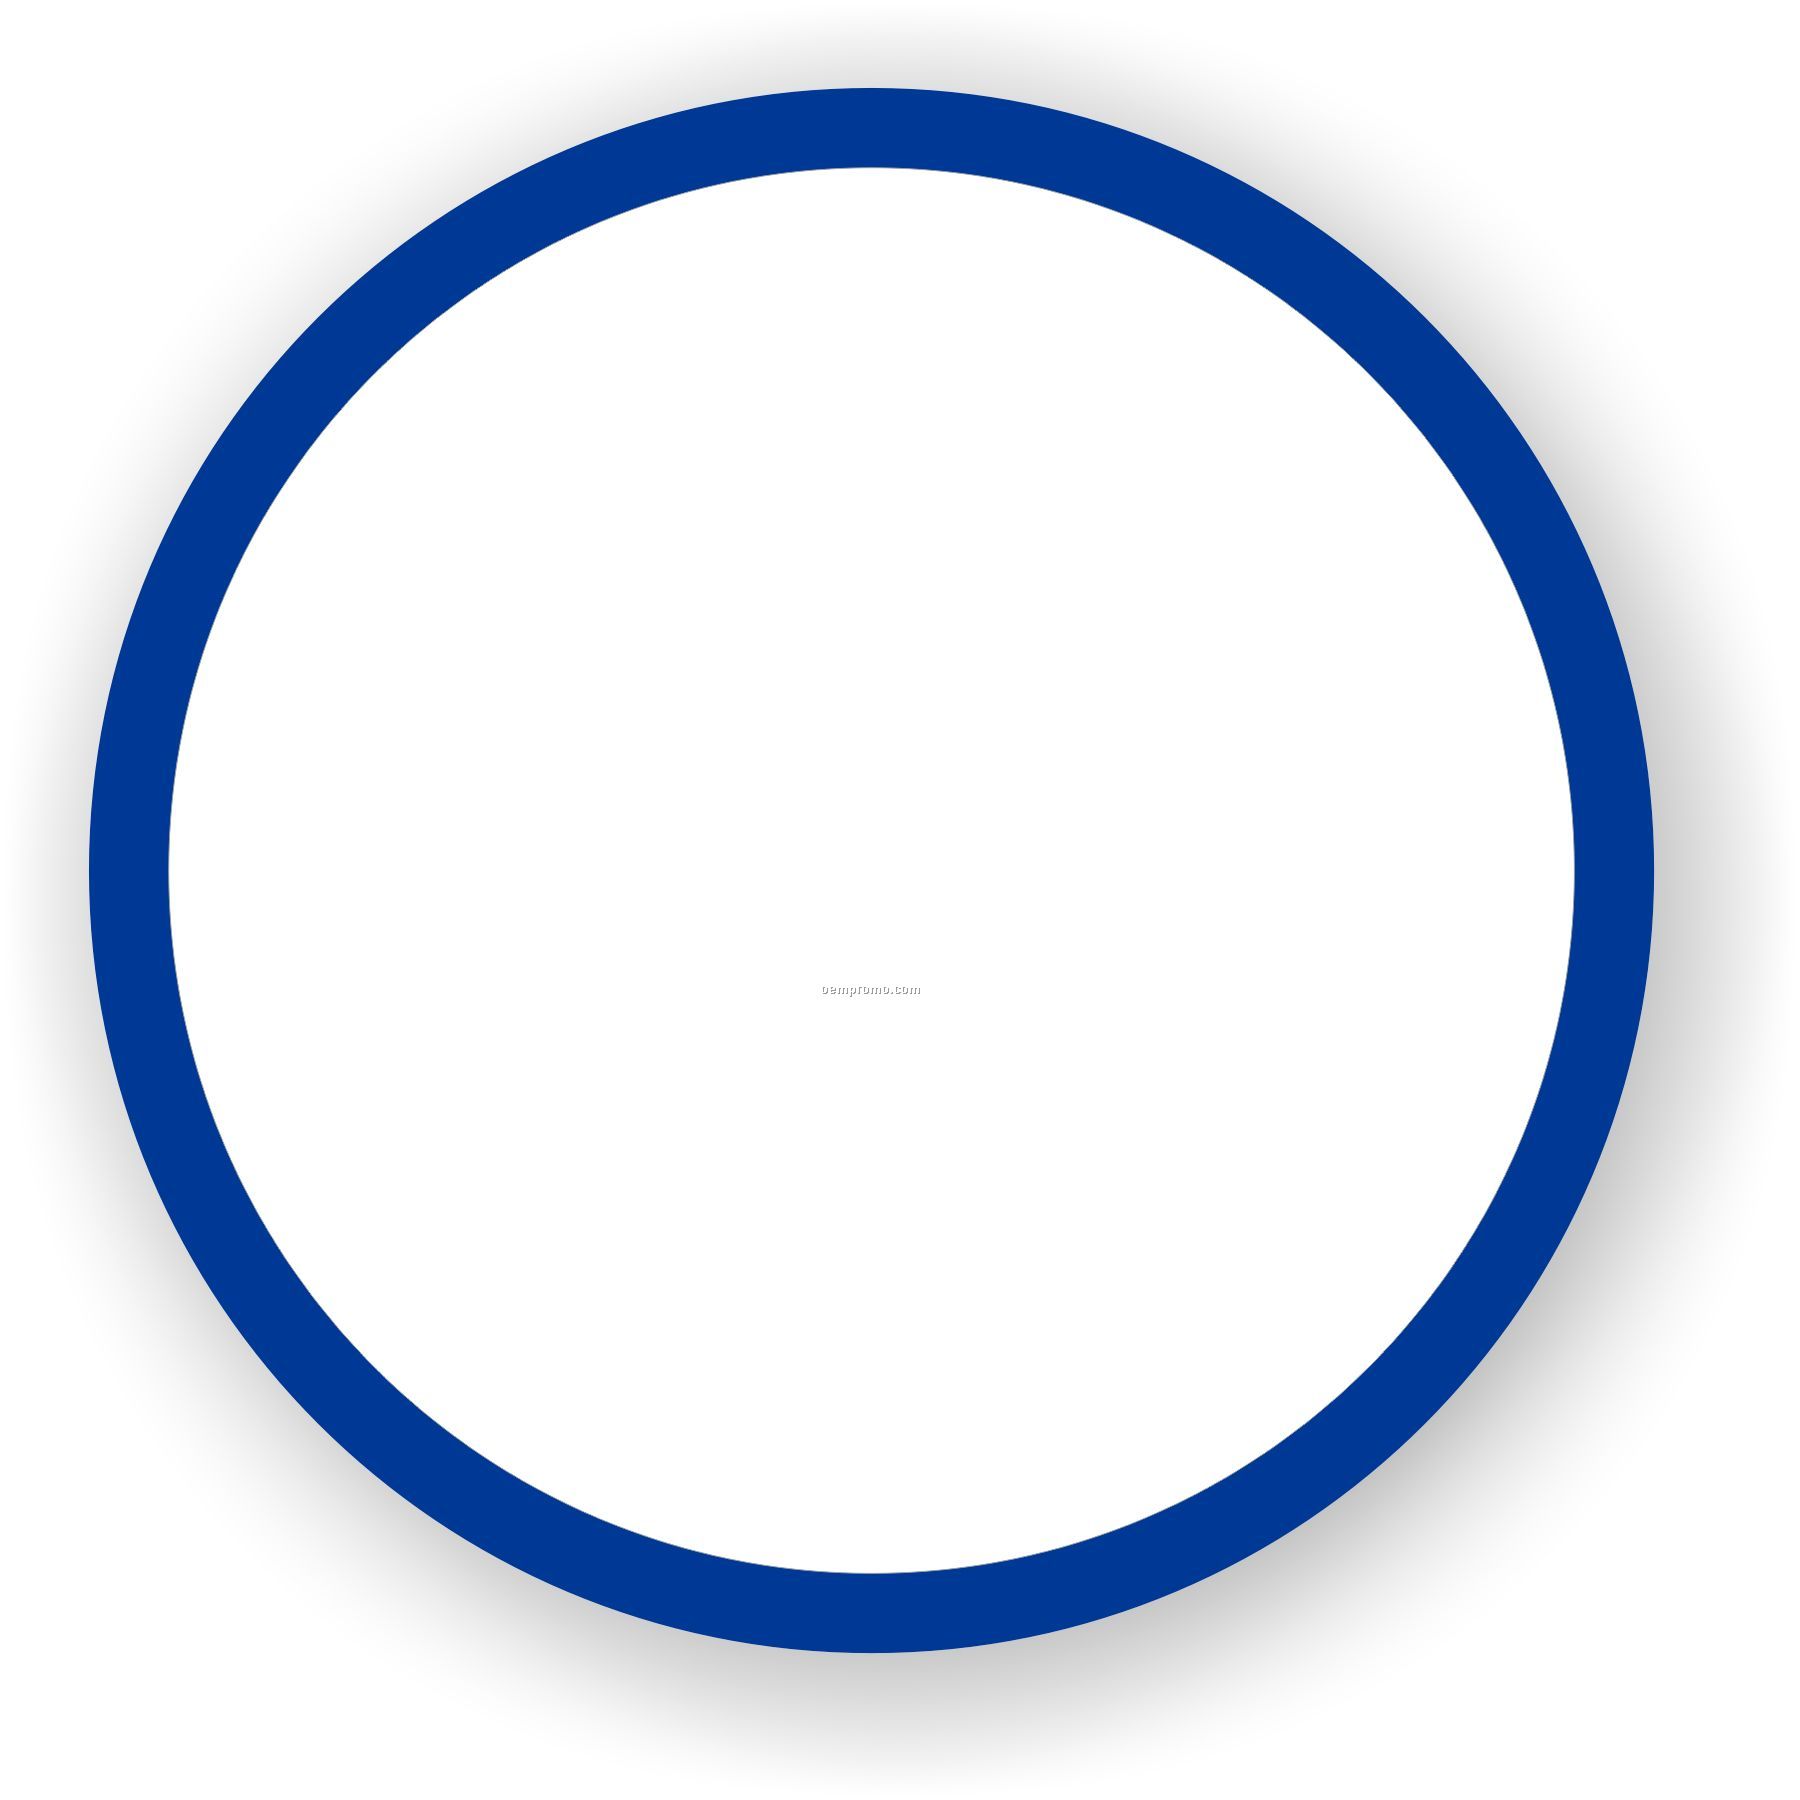 Круг без цензуры. Синий круг. Синий кружок. Круг без фона. Синие кружочки.